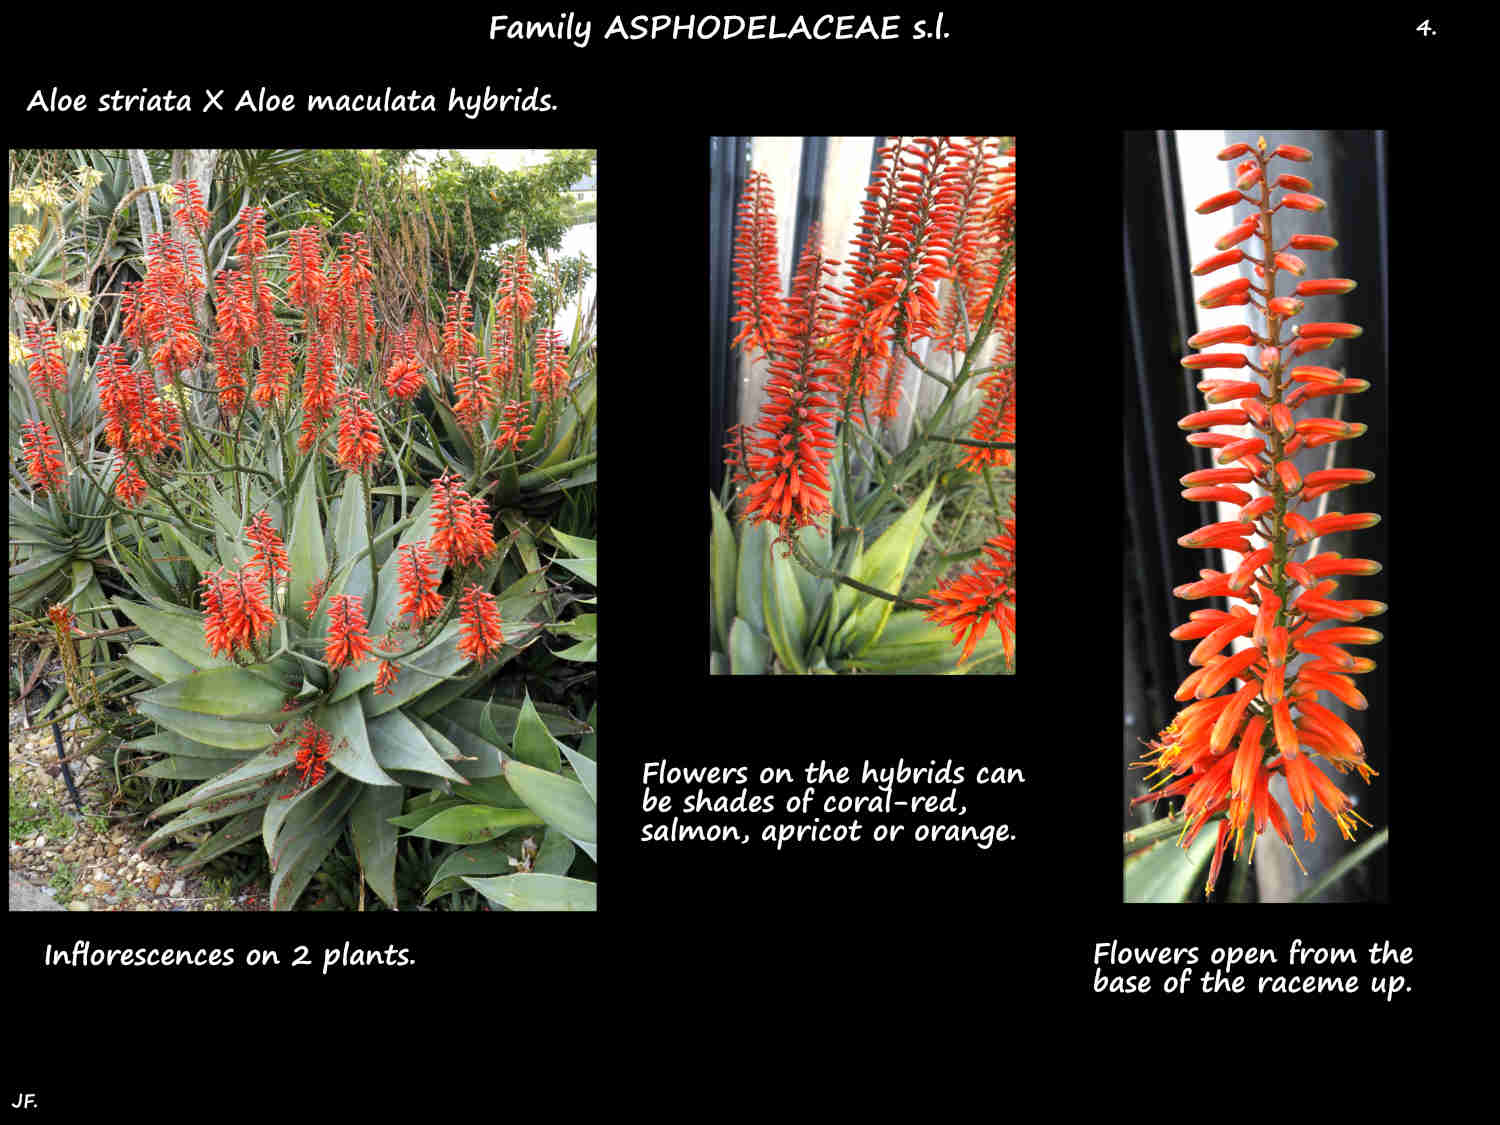 4 Large inflorescences of Aloe striata hybrids